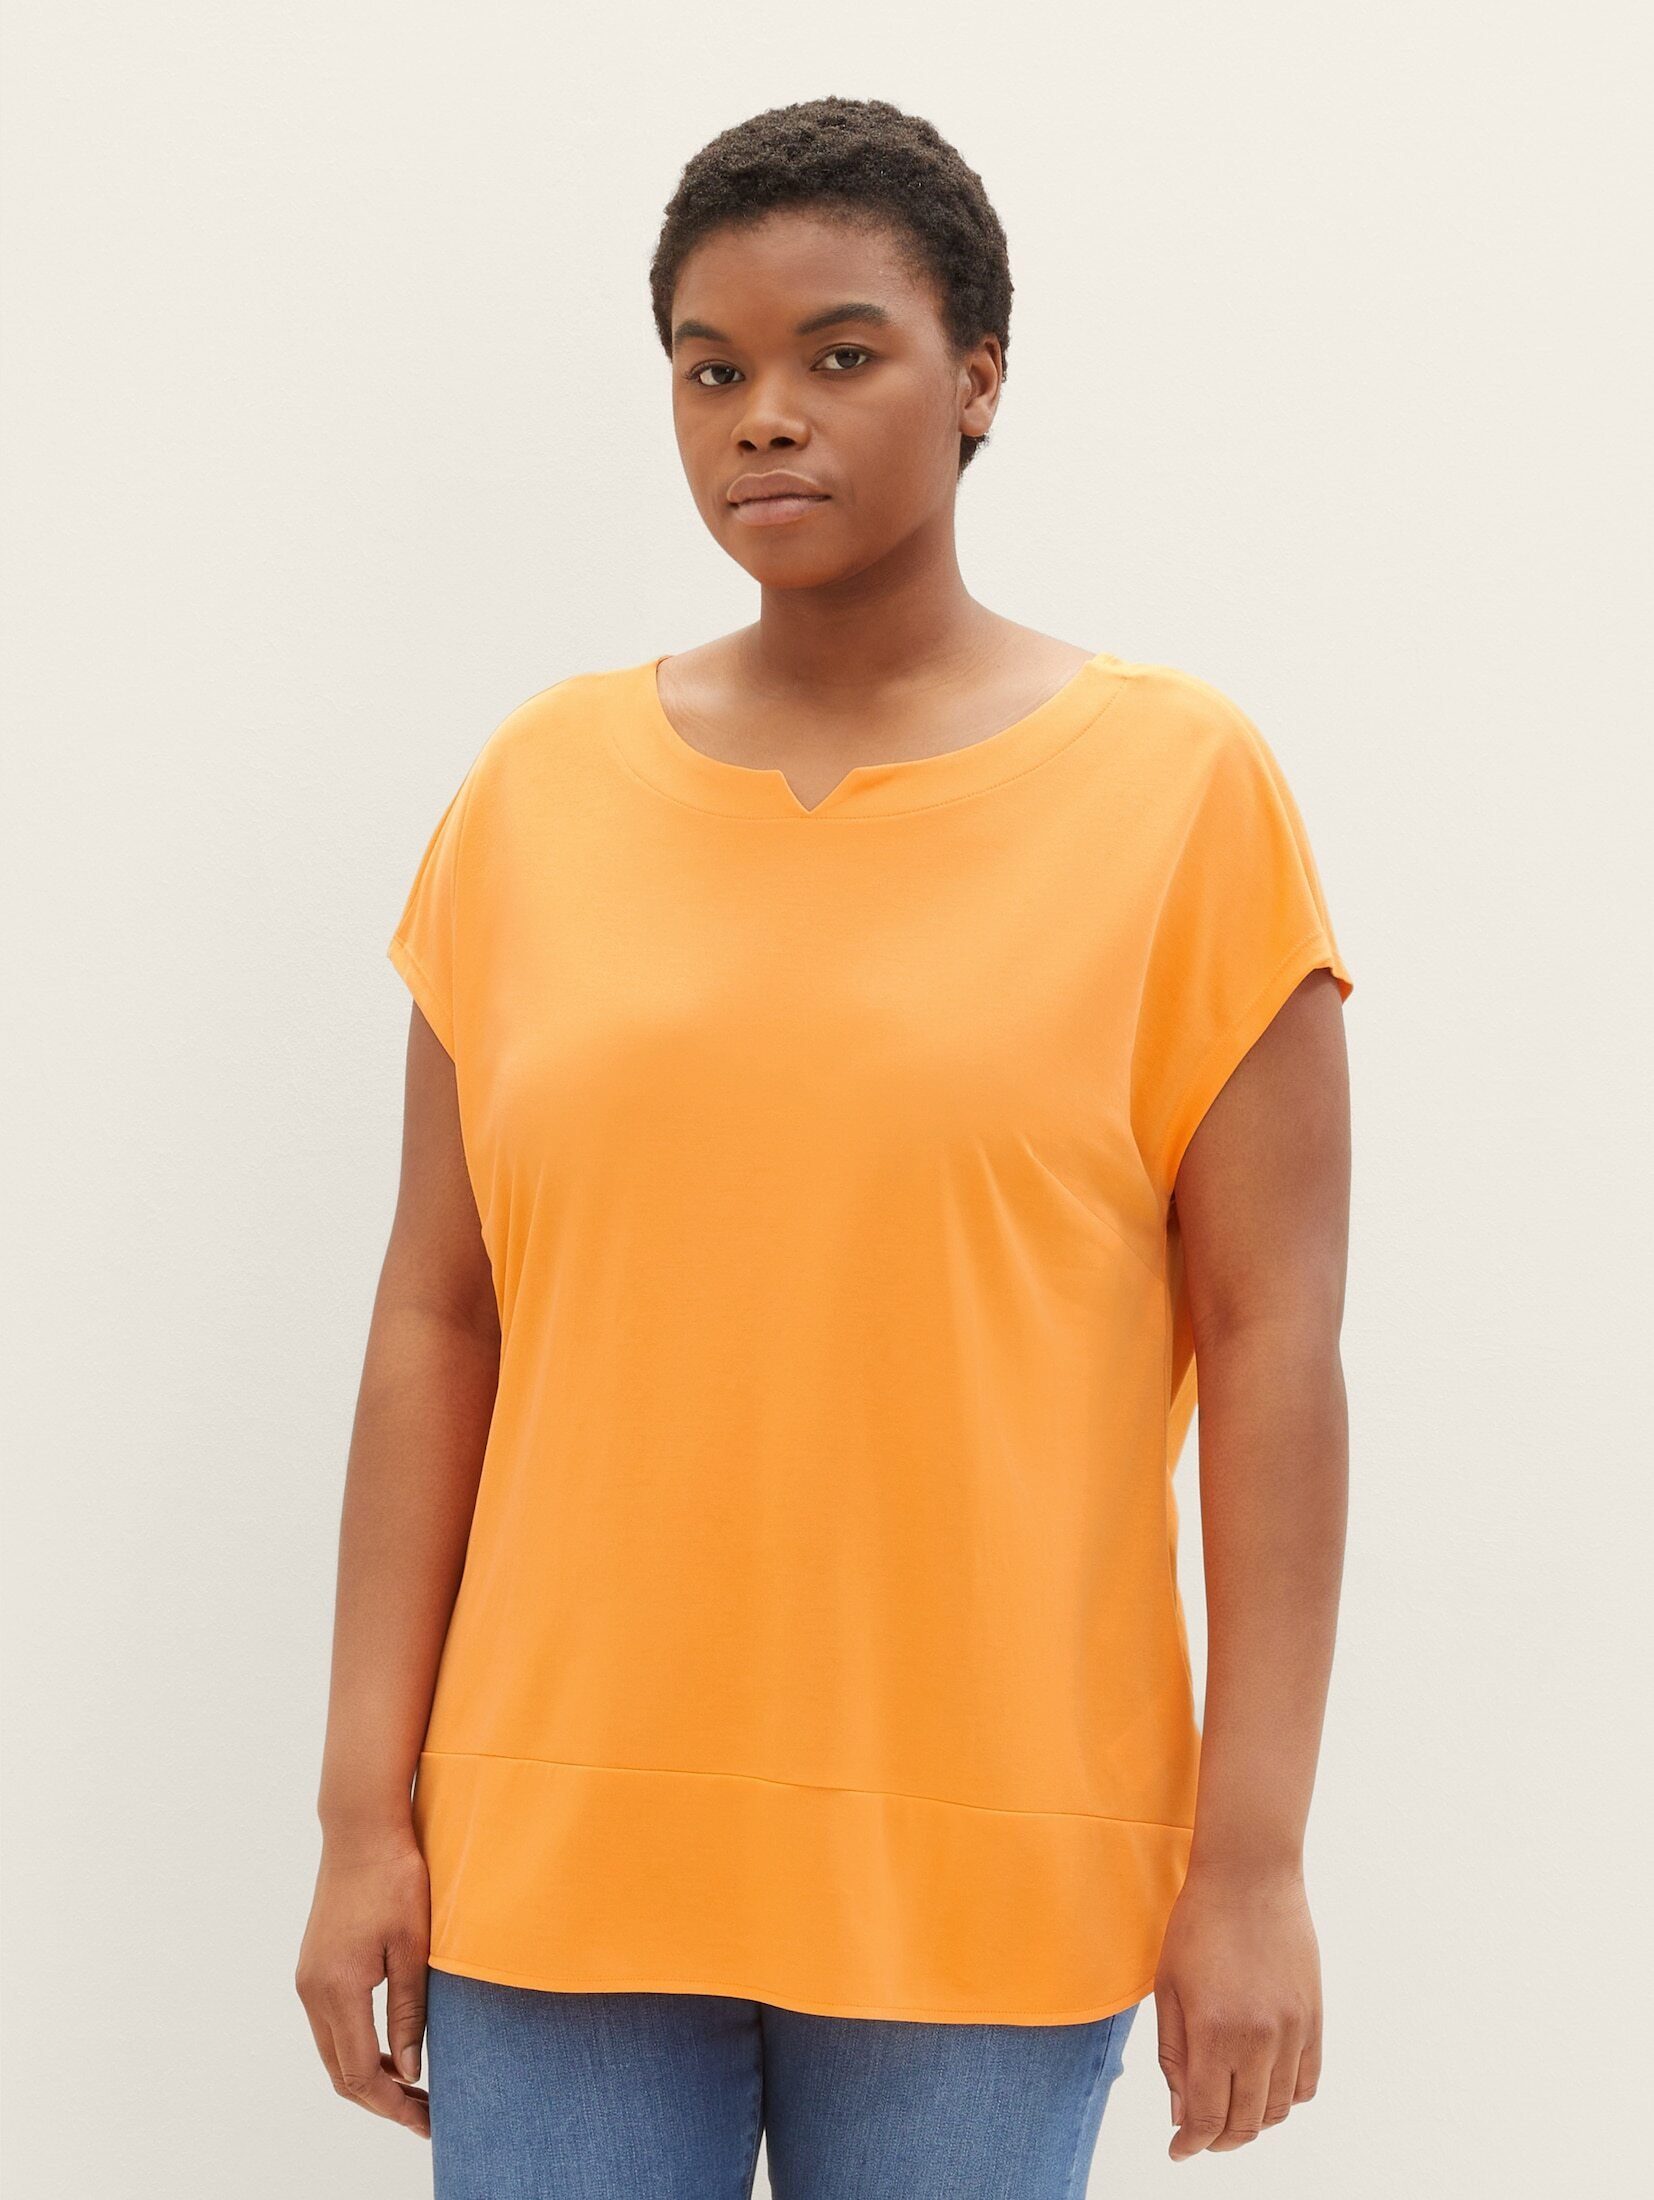 TOM TAILOR PLUS T-Shirt Plus - Basic T-Shirt bright mango orange